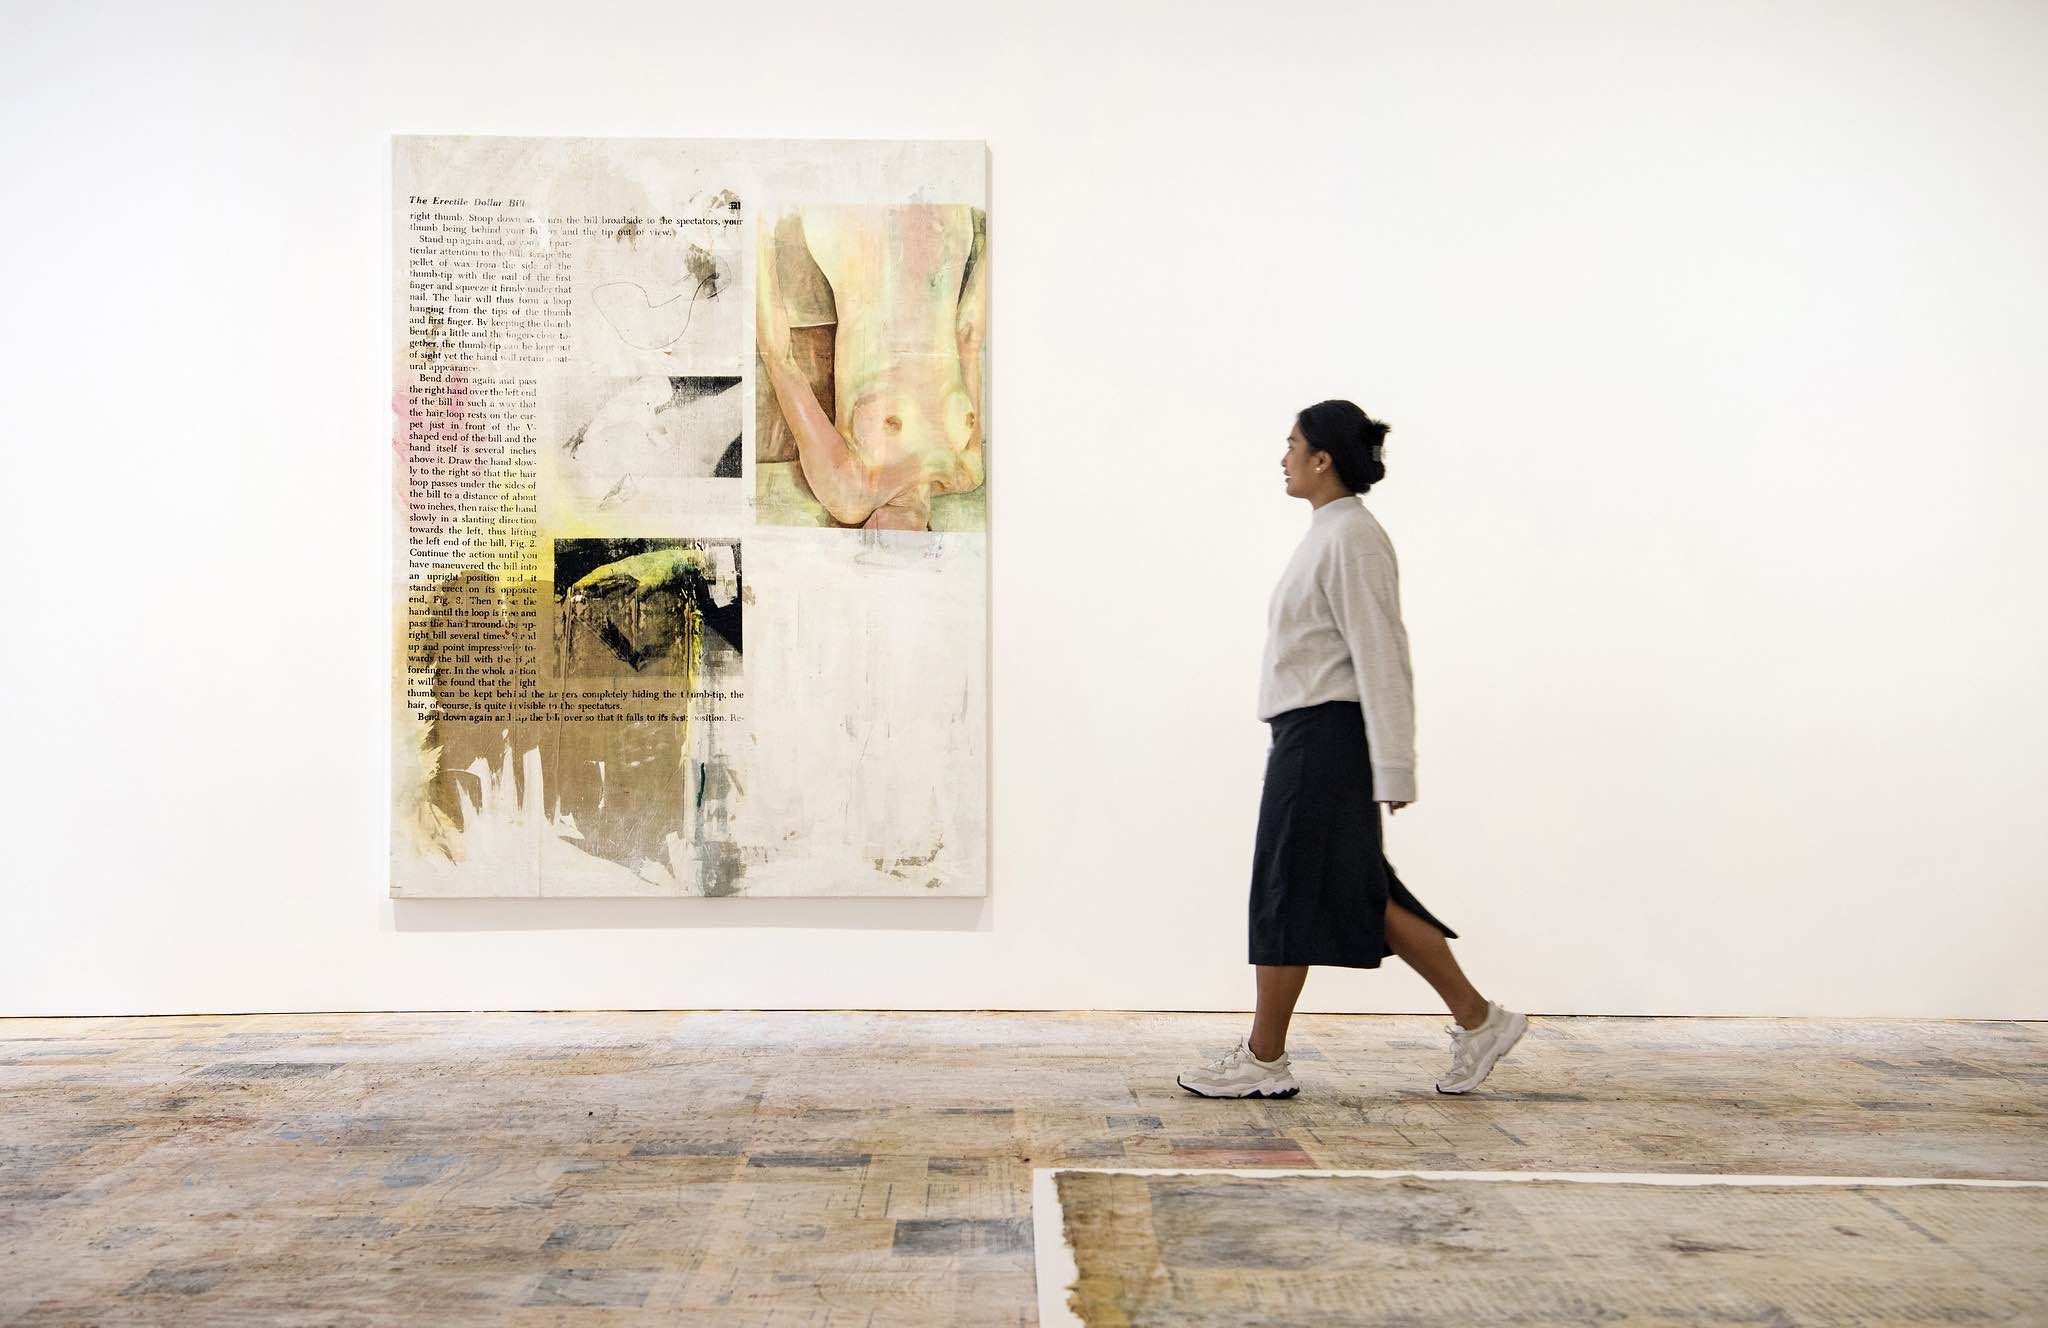 Basquiat x Warhol” at the Fondation Louis Vuitton